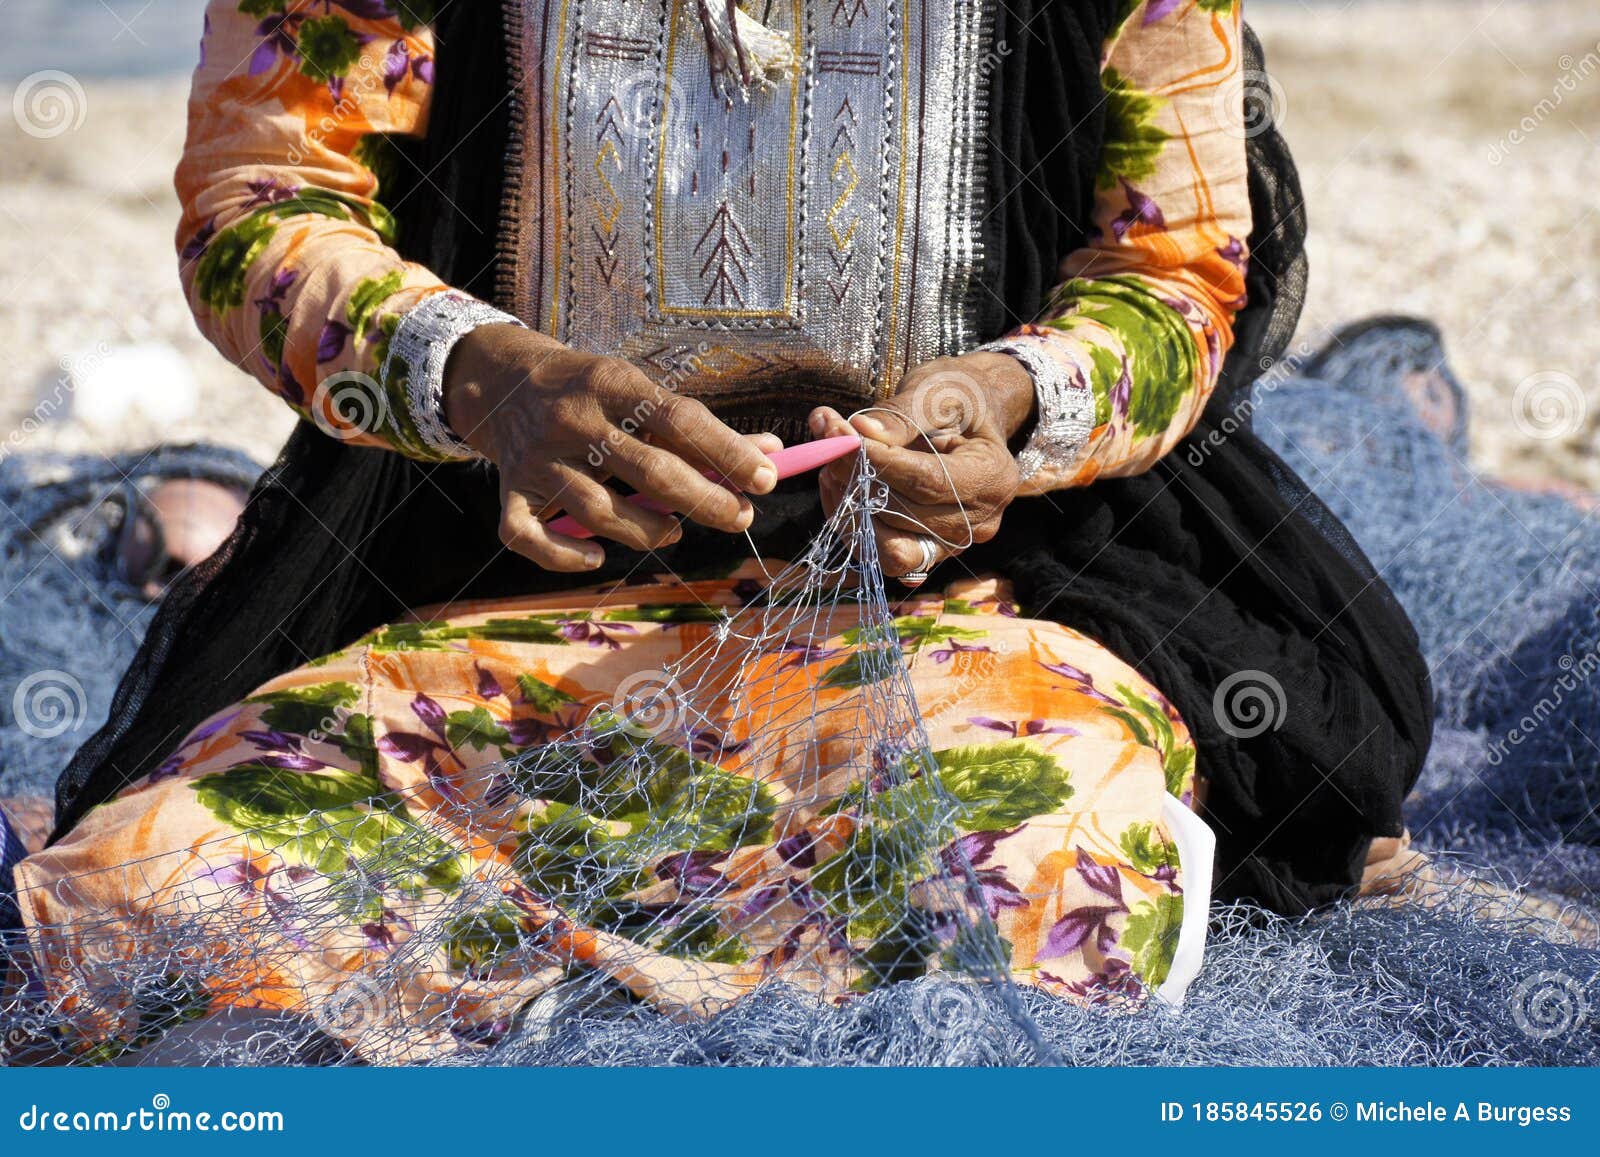 woman in traditional dress mending fishing net, oman